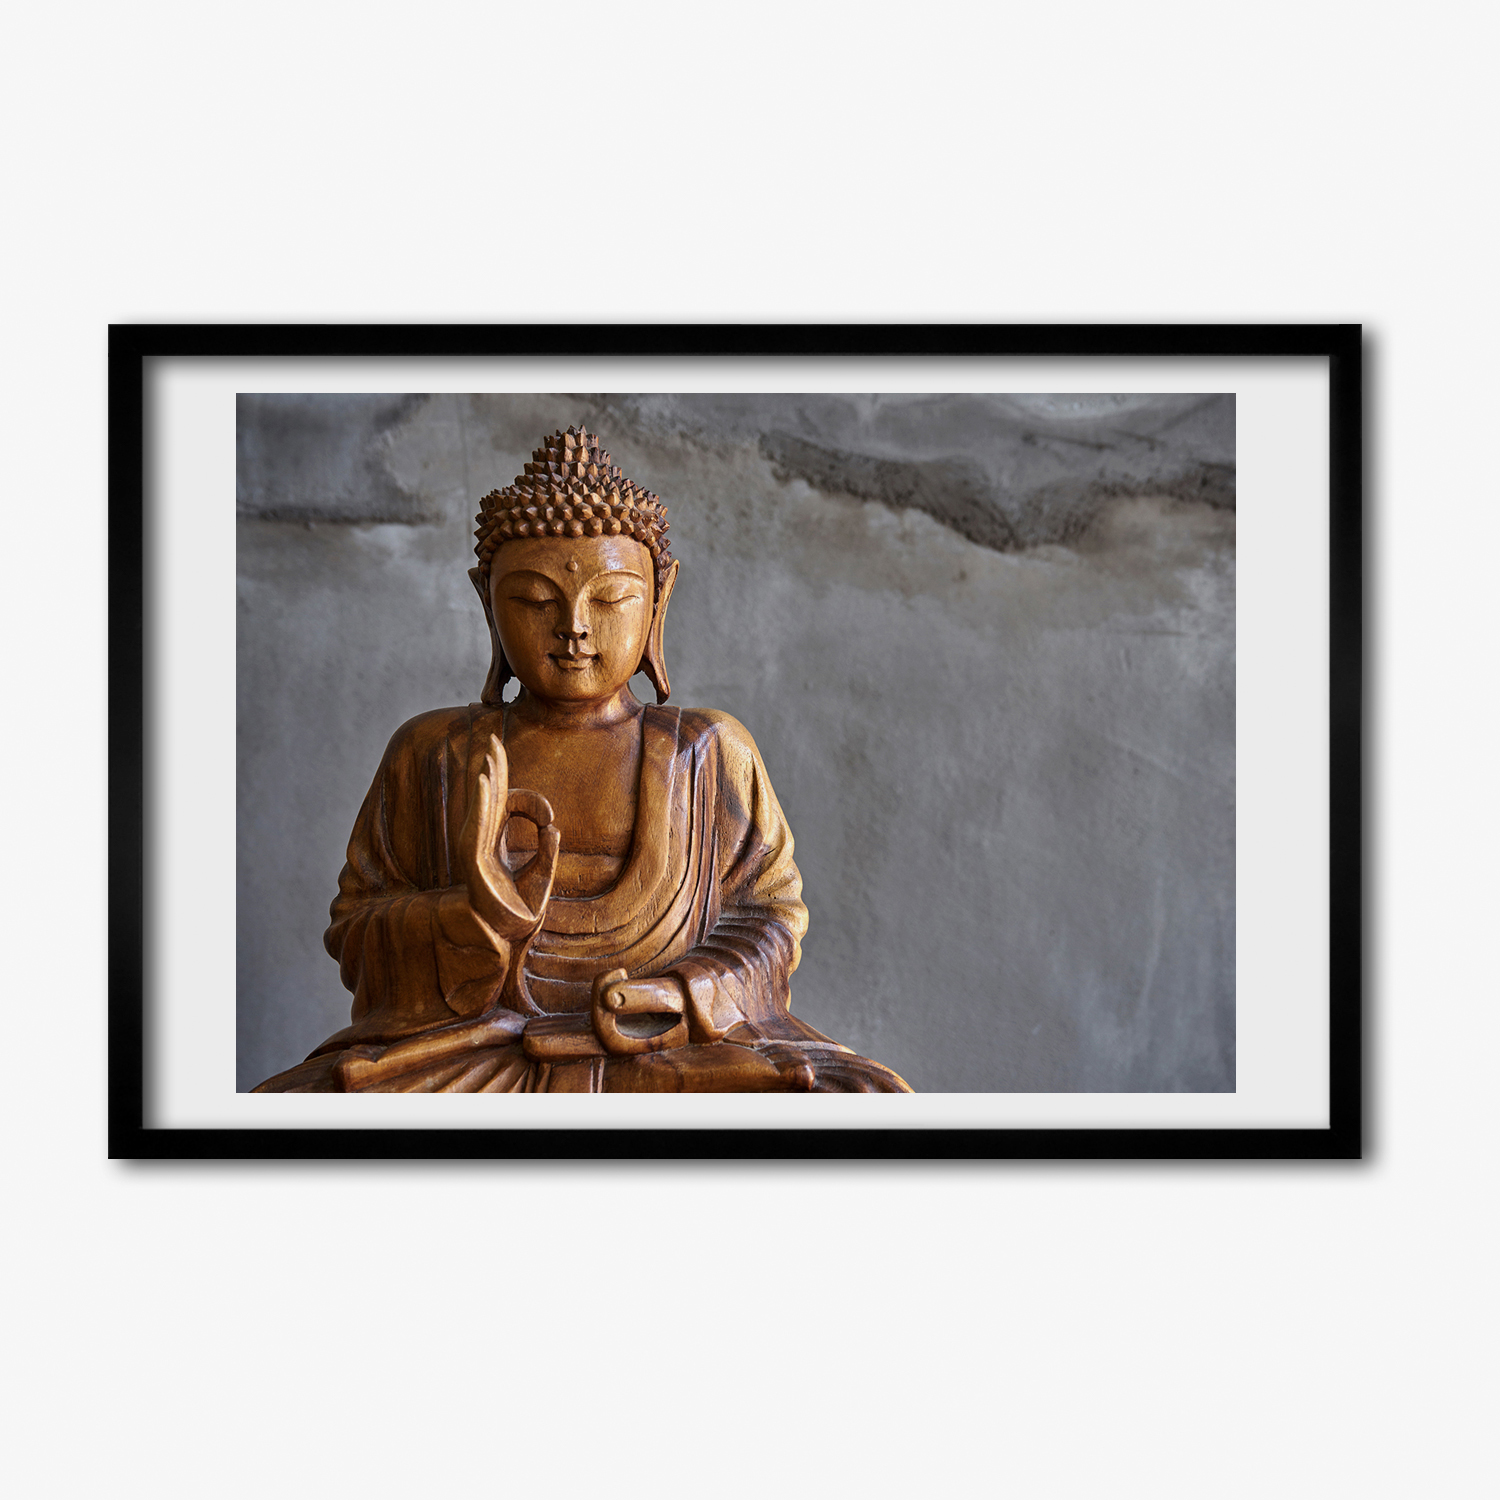 Tulup Bild MDF gerahmte Wand Dekor 60x40cm Holz buddha